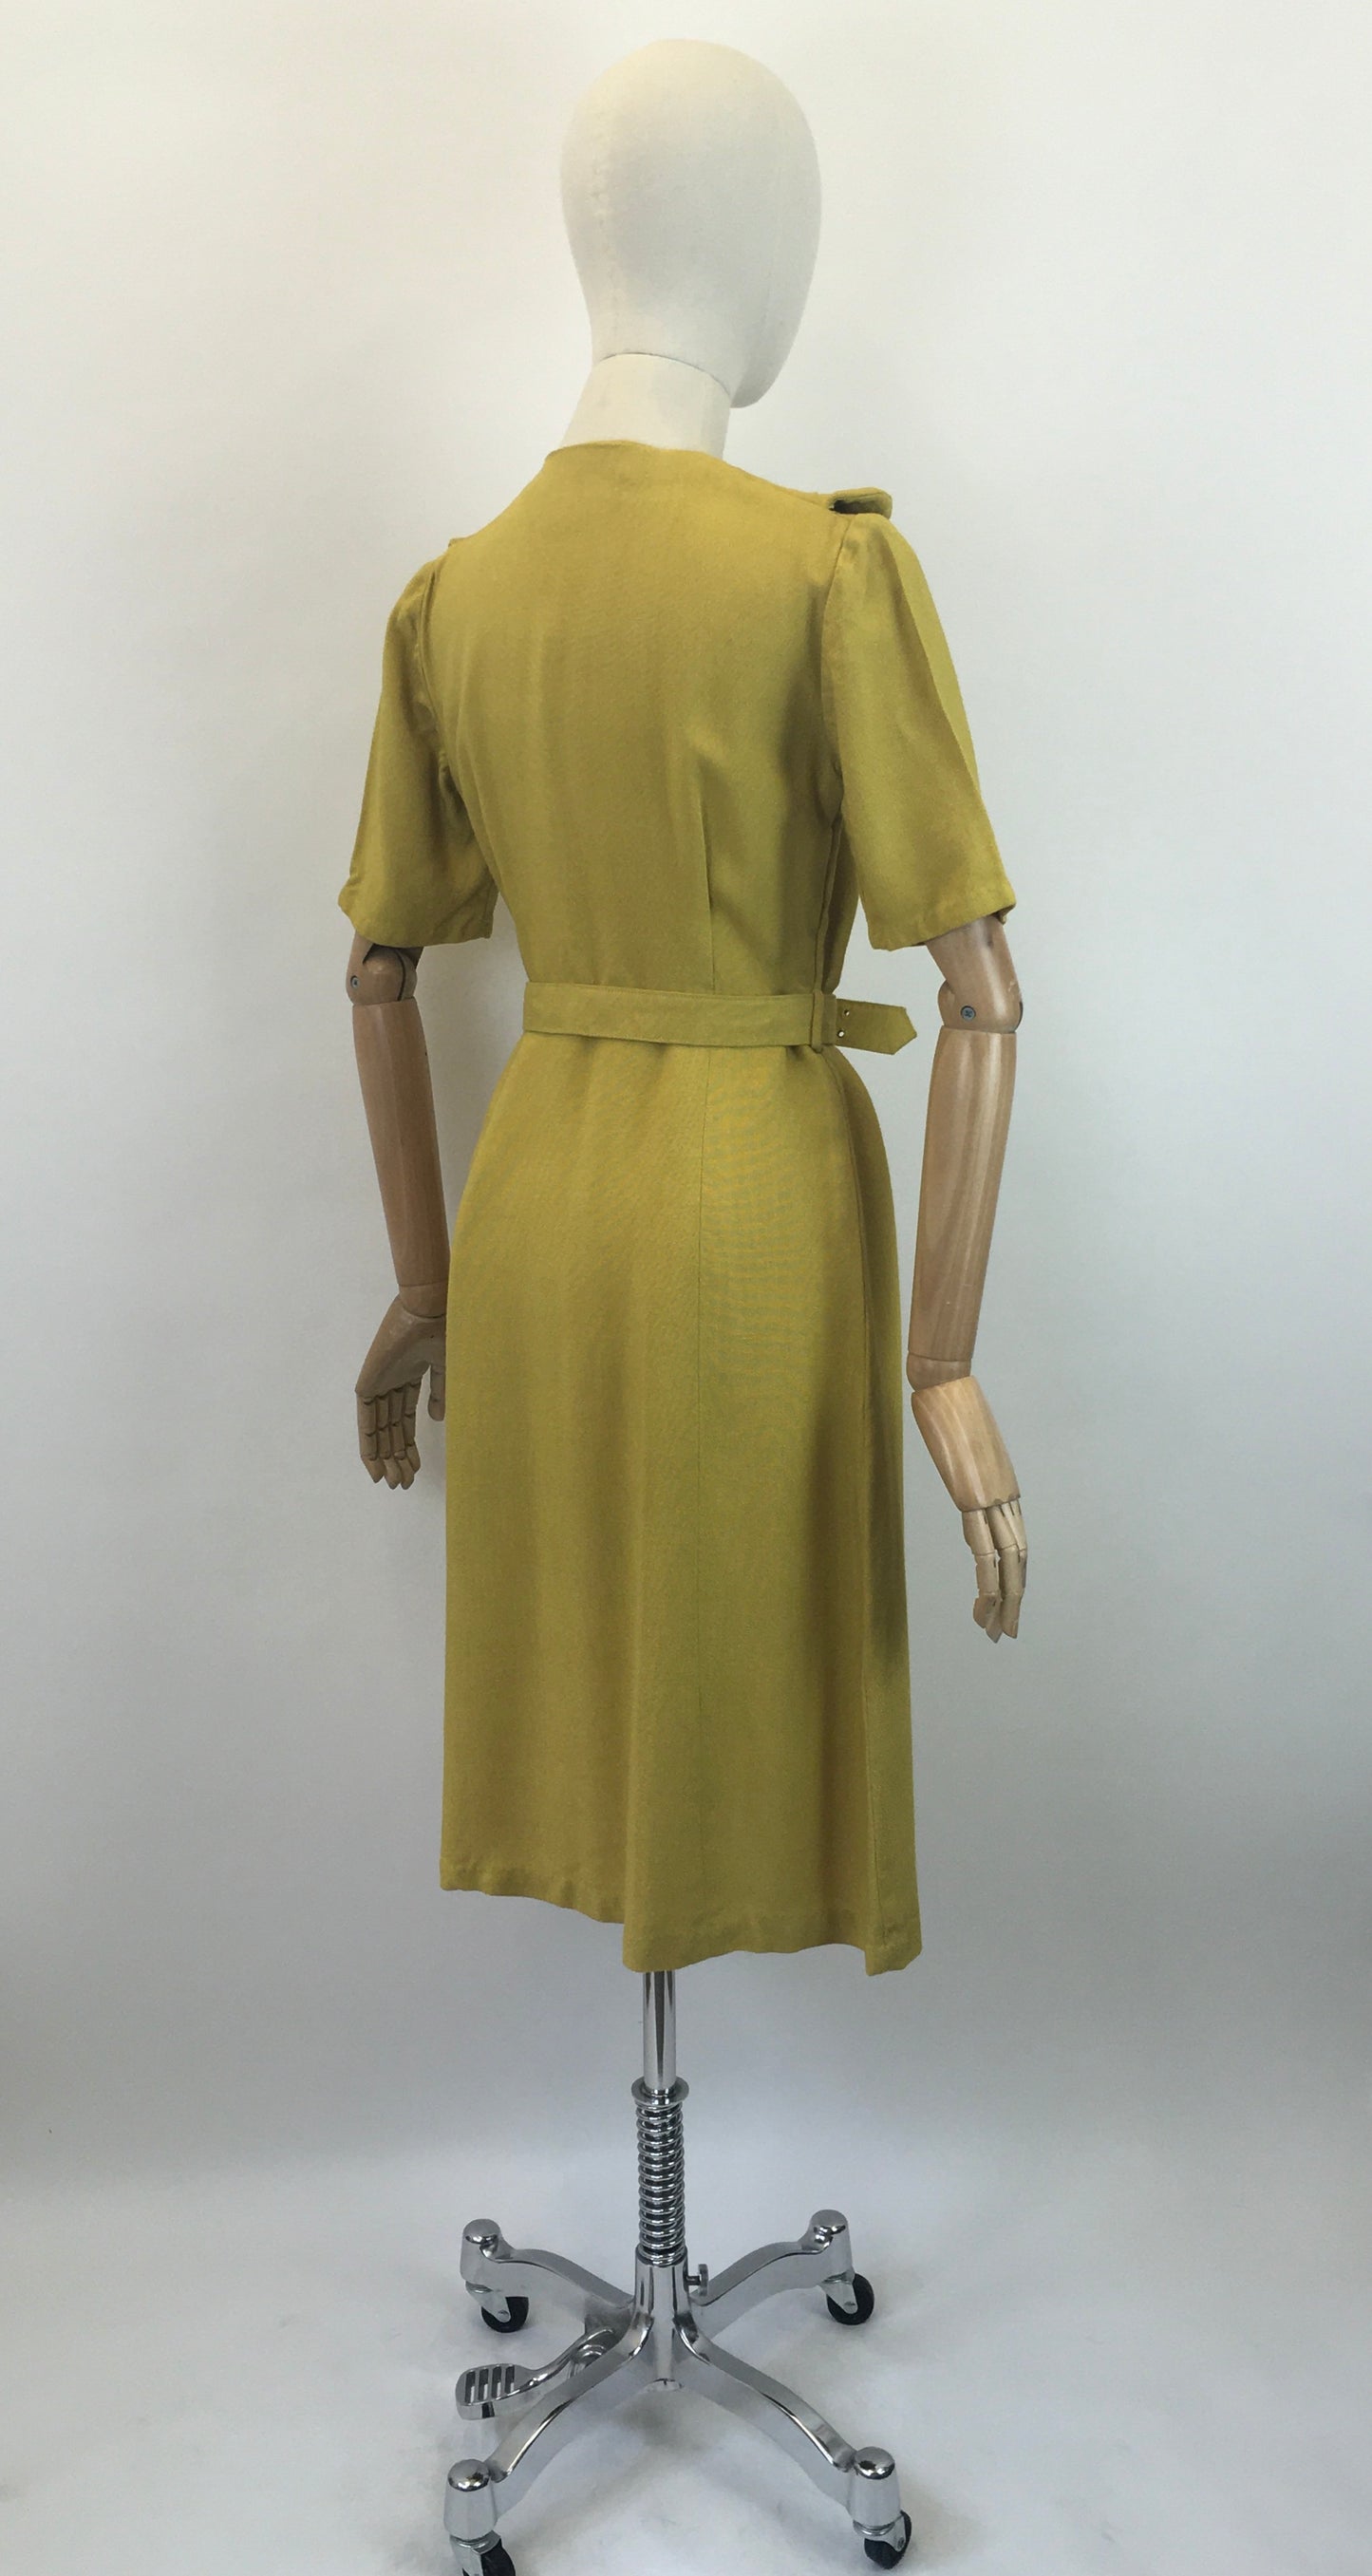 Original 1940's Stunning CC41 Moygashal Linen Dress - In A Bright Golden Yellow